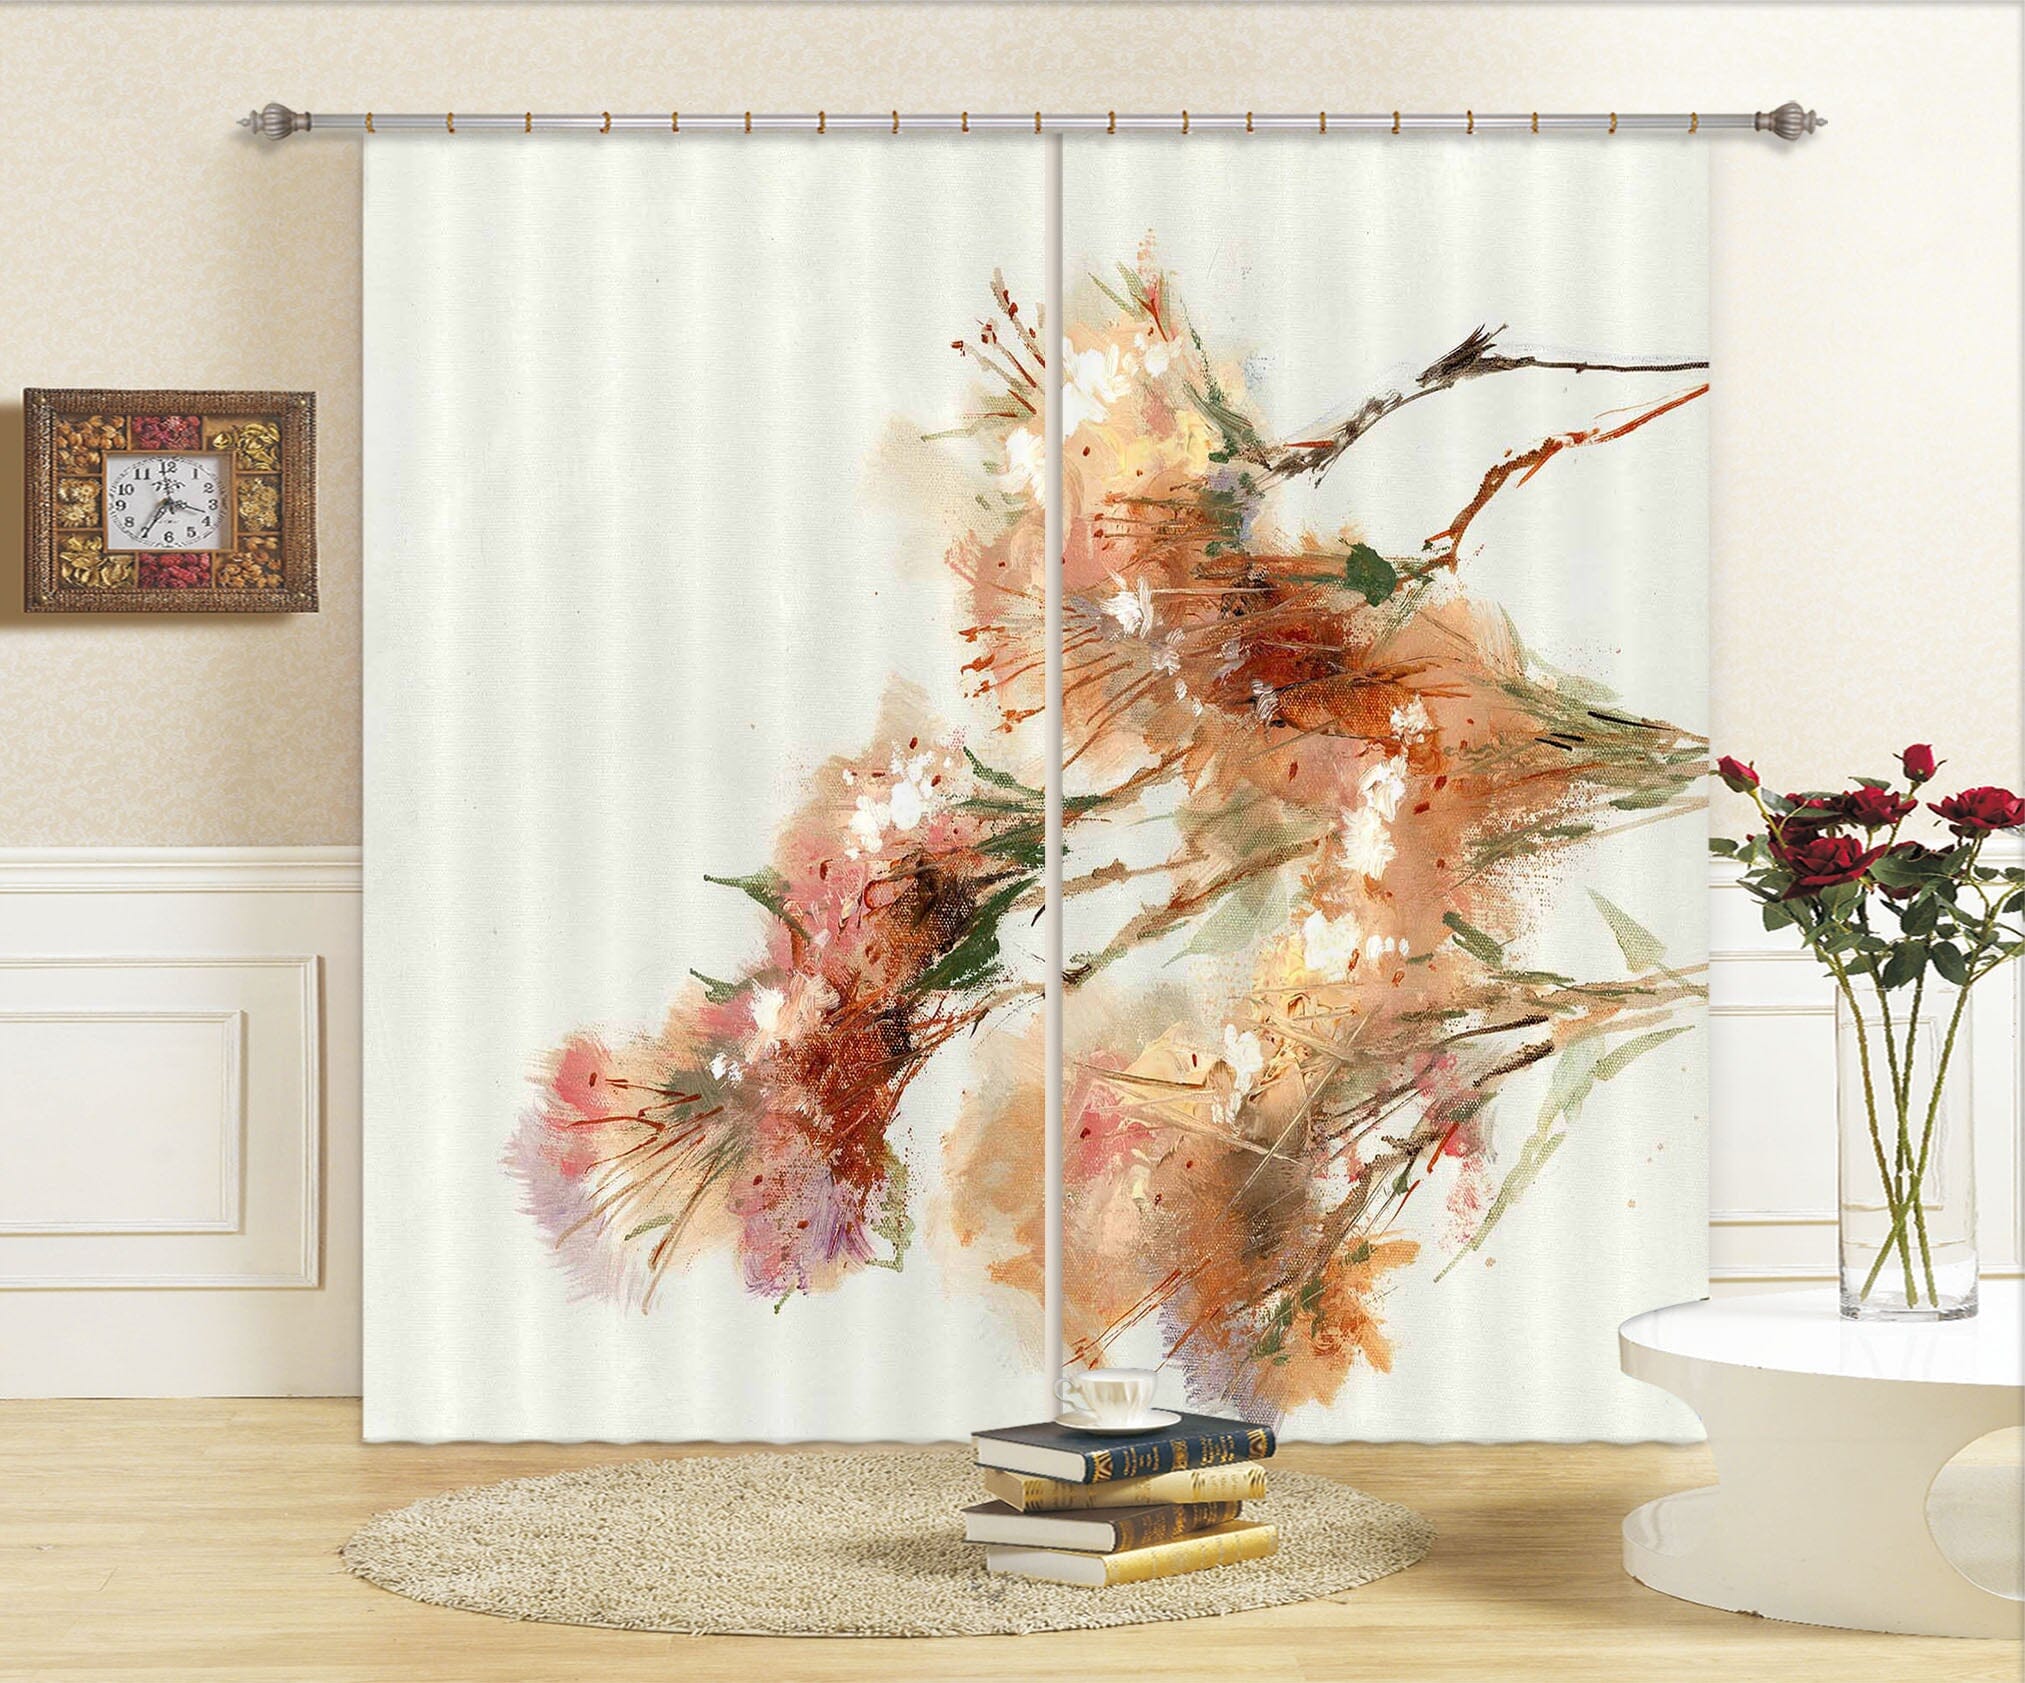 3D Colored Flower 003 Anne Farrall Doyle Curtain Curtains Drapes Curtains AJ Creativity Home 